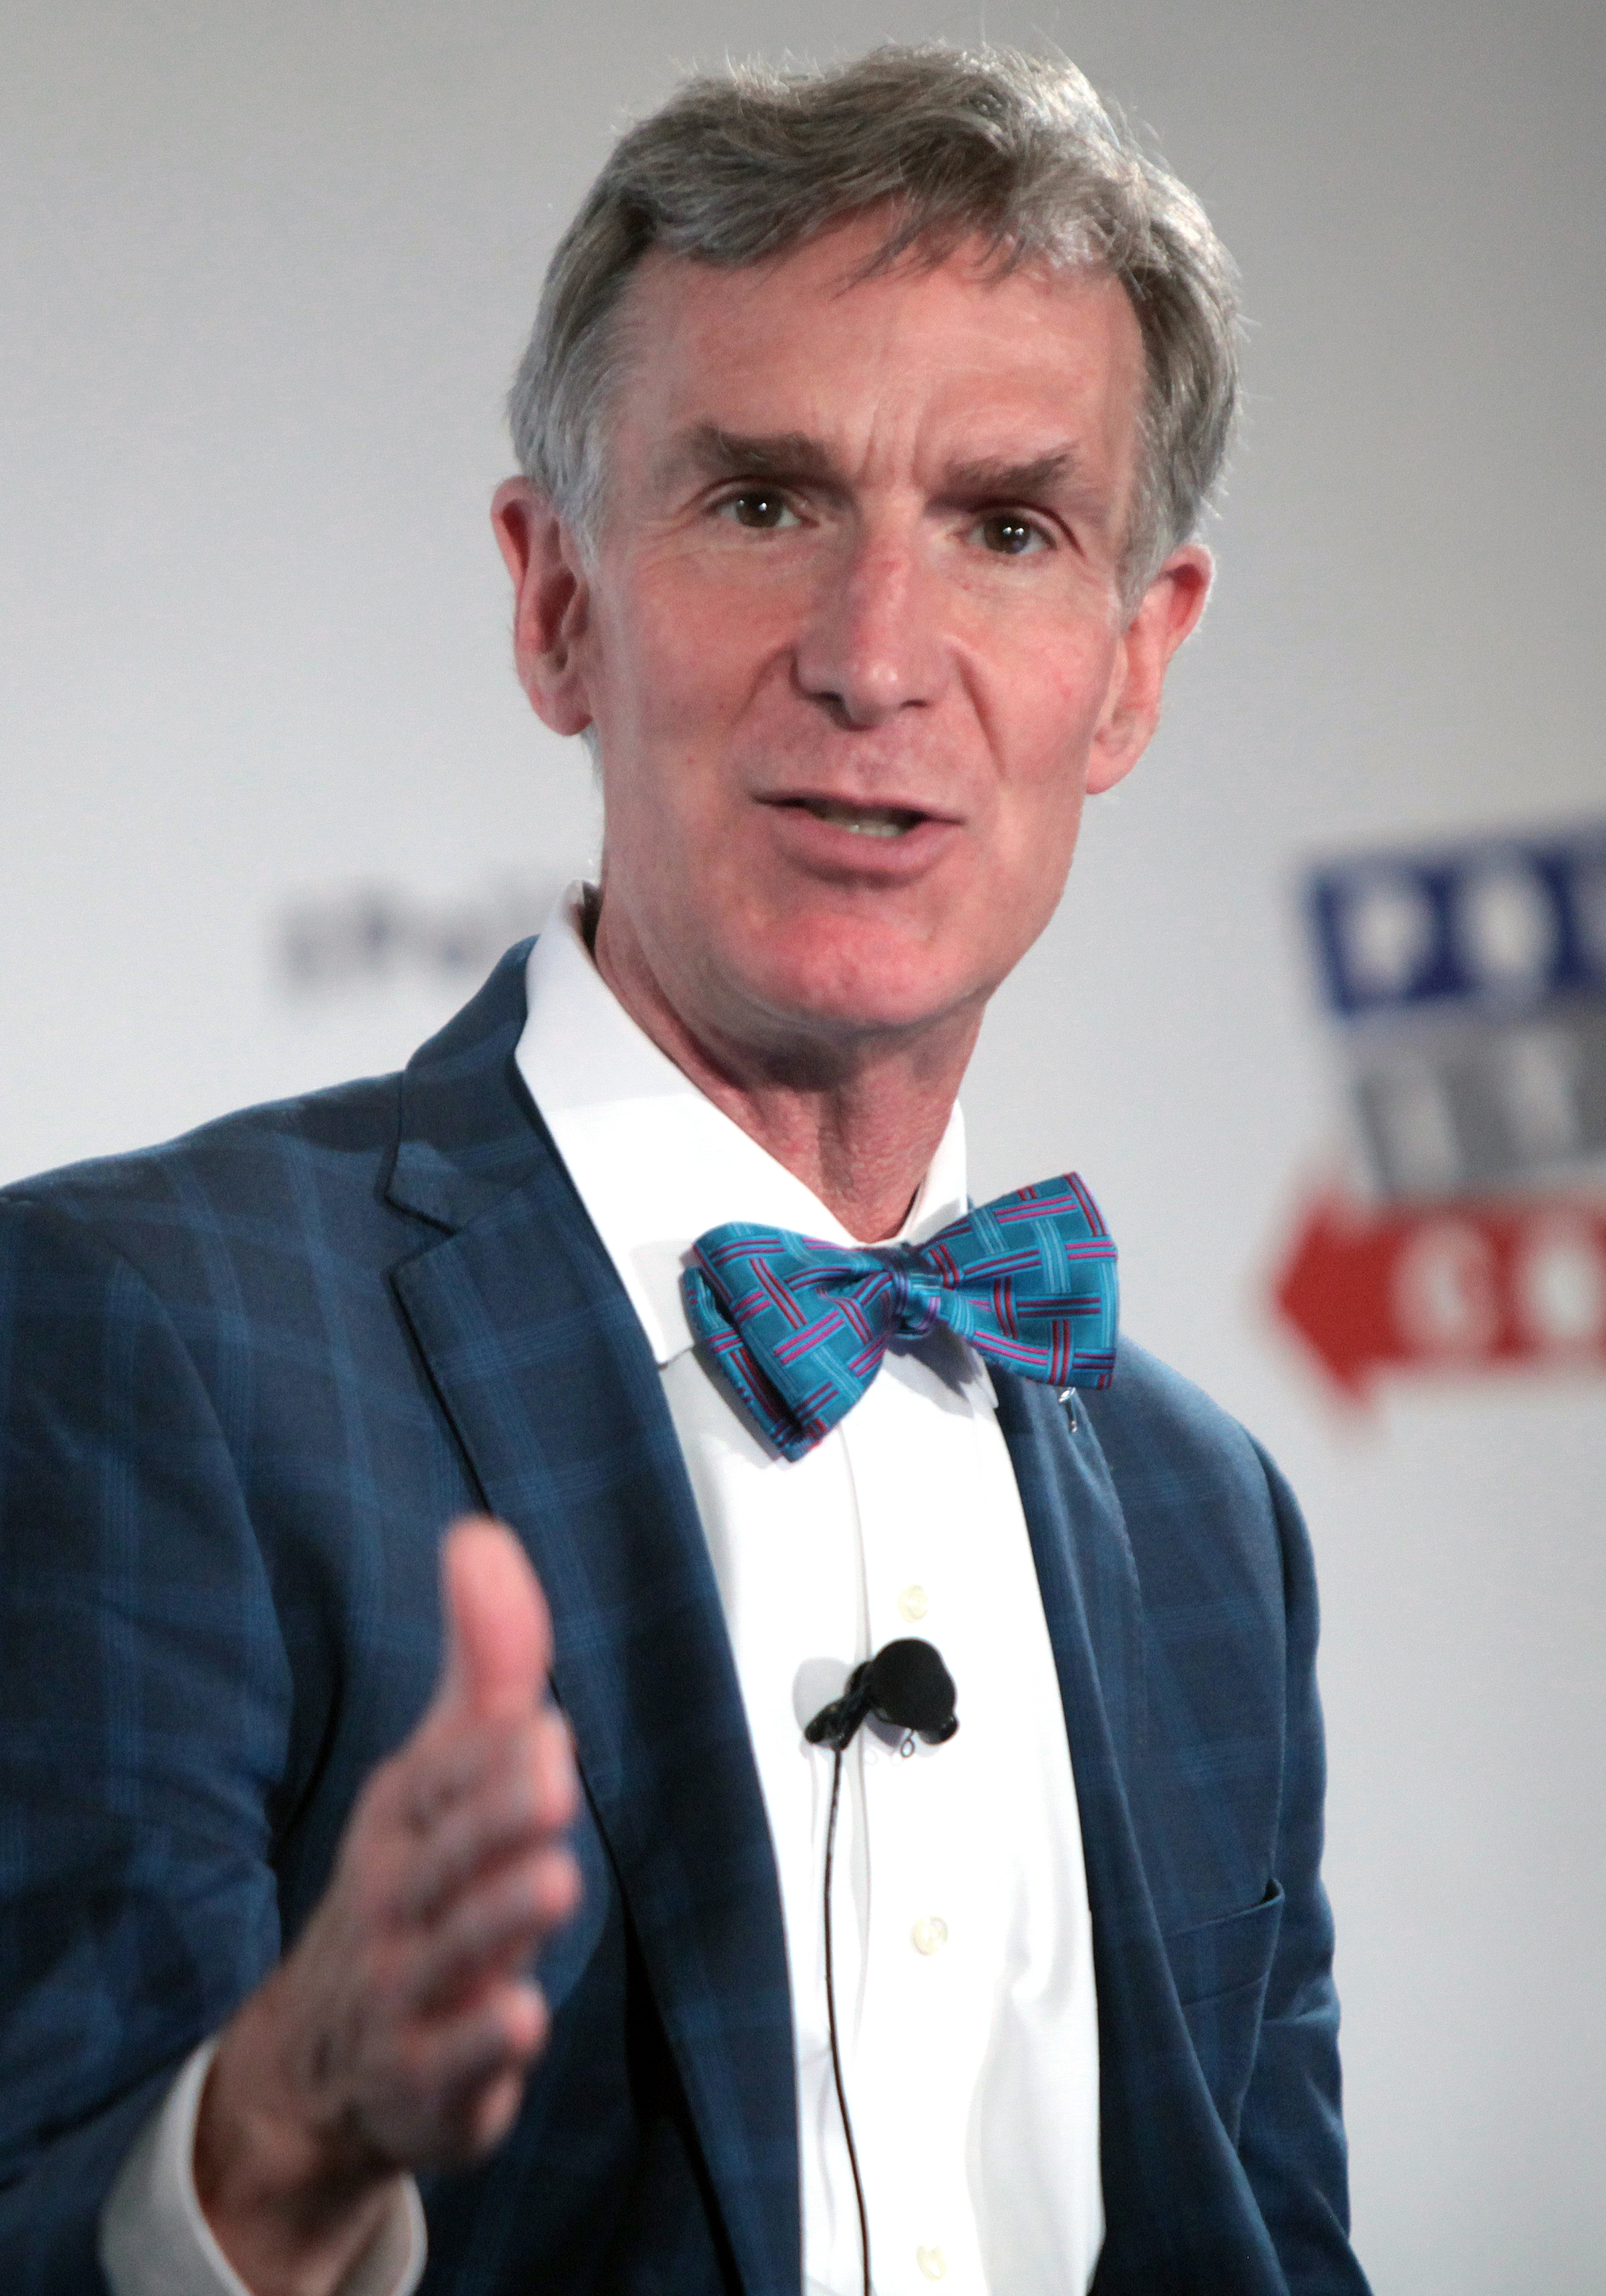 Bill Nye the Science Guy photo